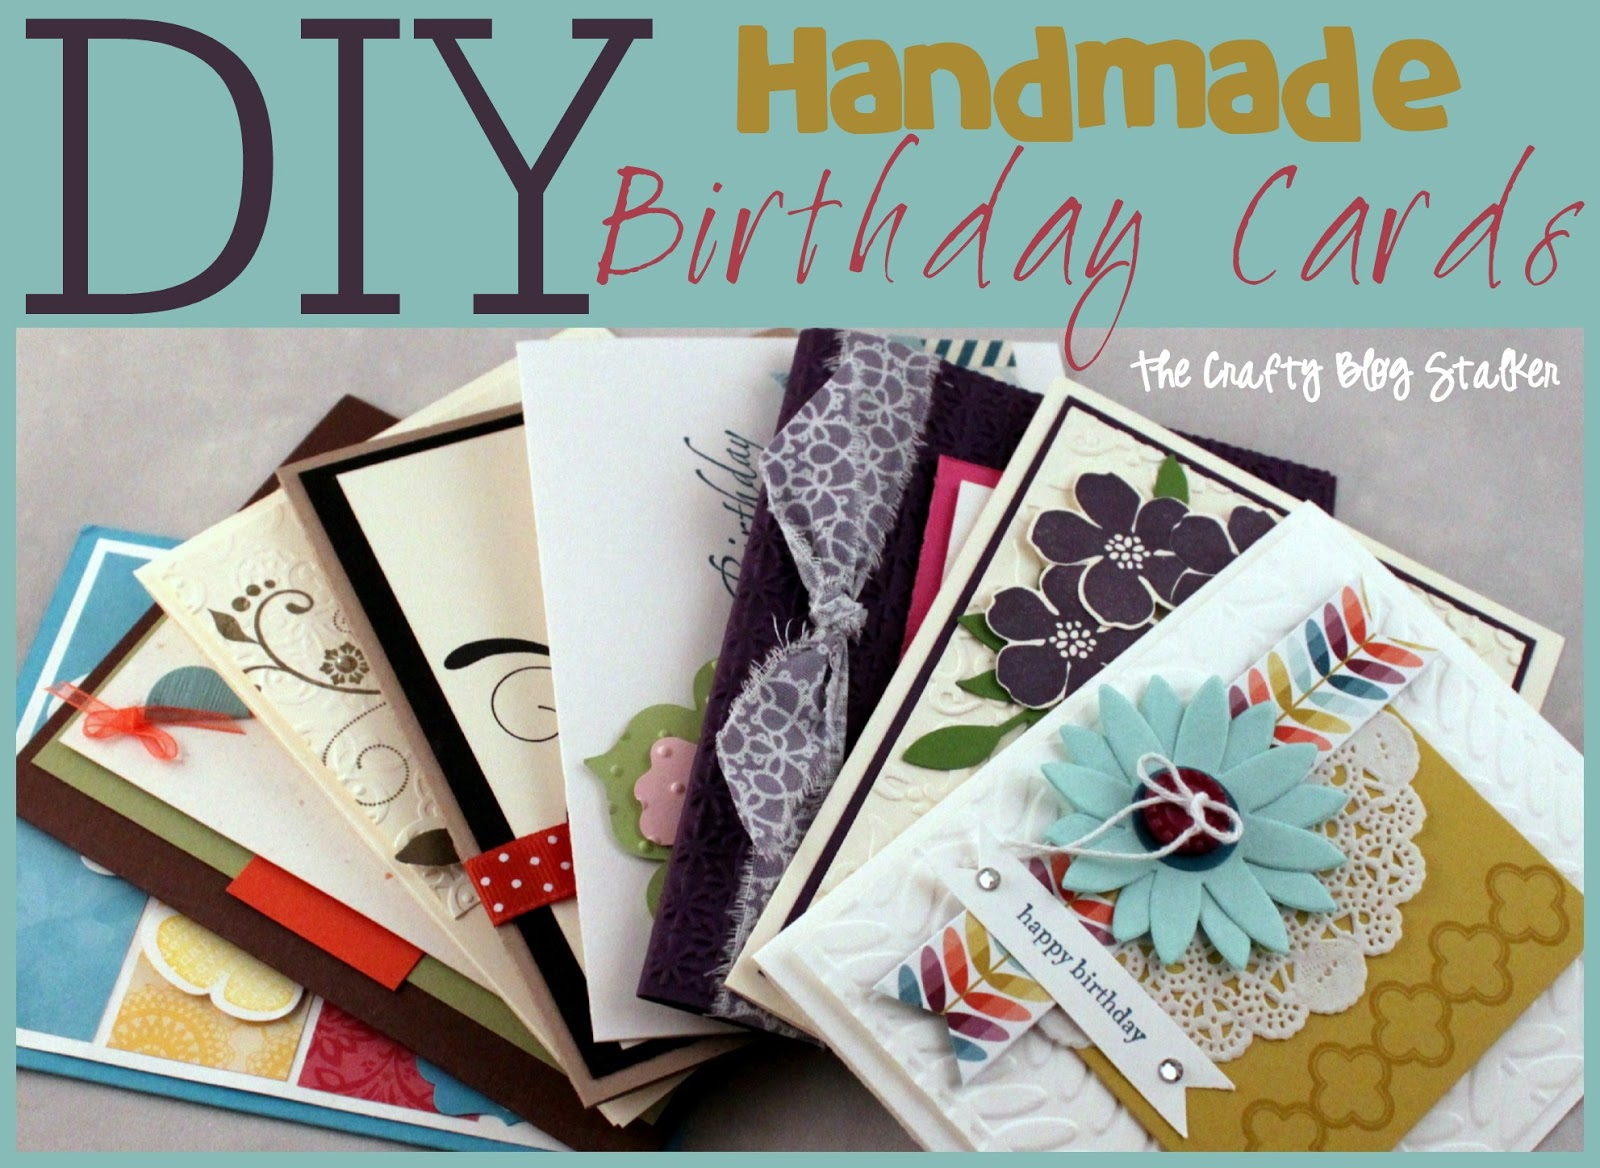 Happy Birthday Cards Homemade Ideas Handmade Birthday Card Ideas The Crafty Blog Stalker